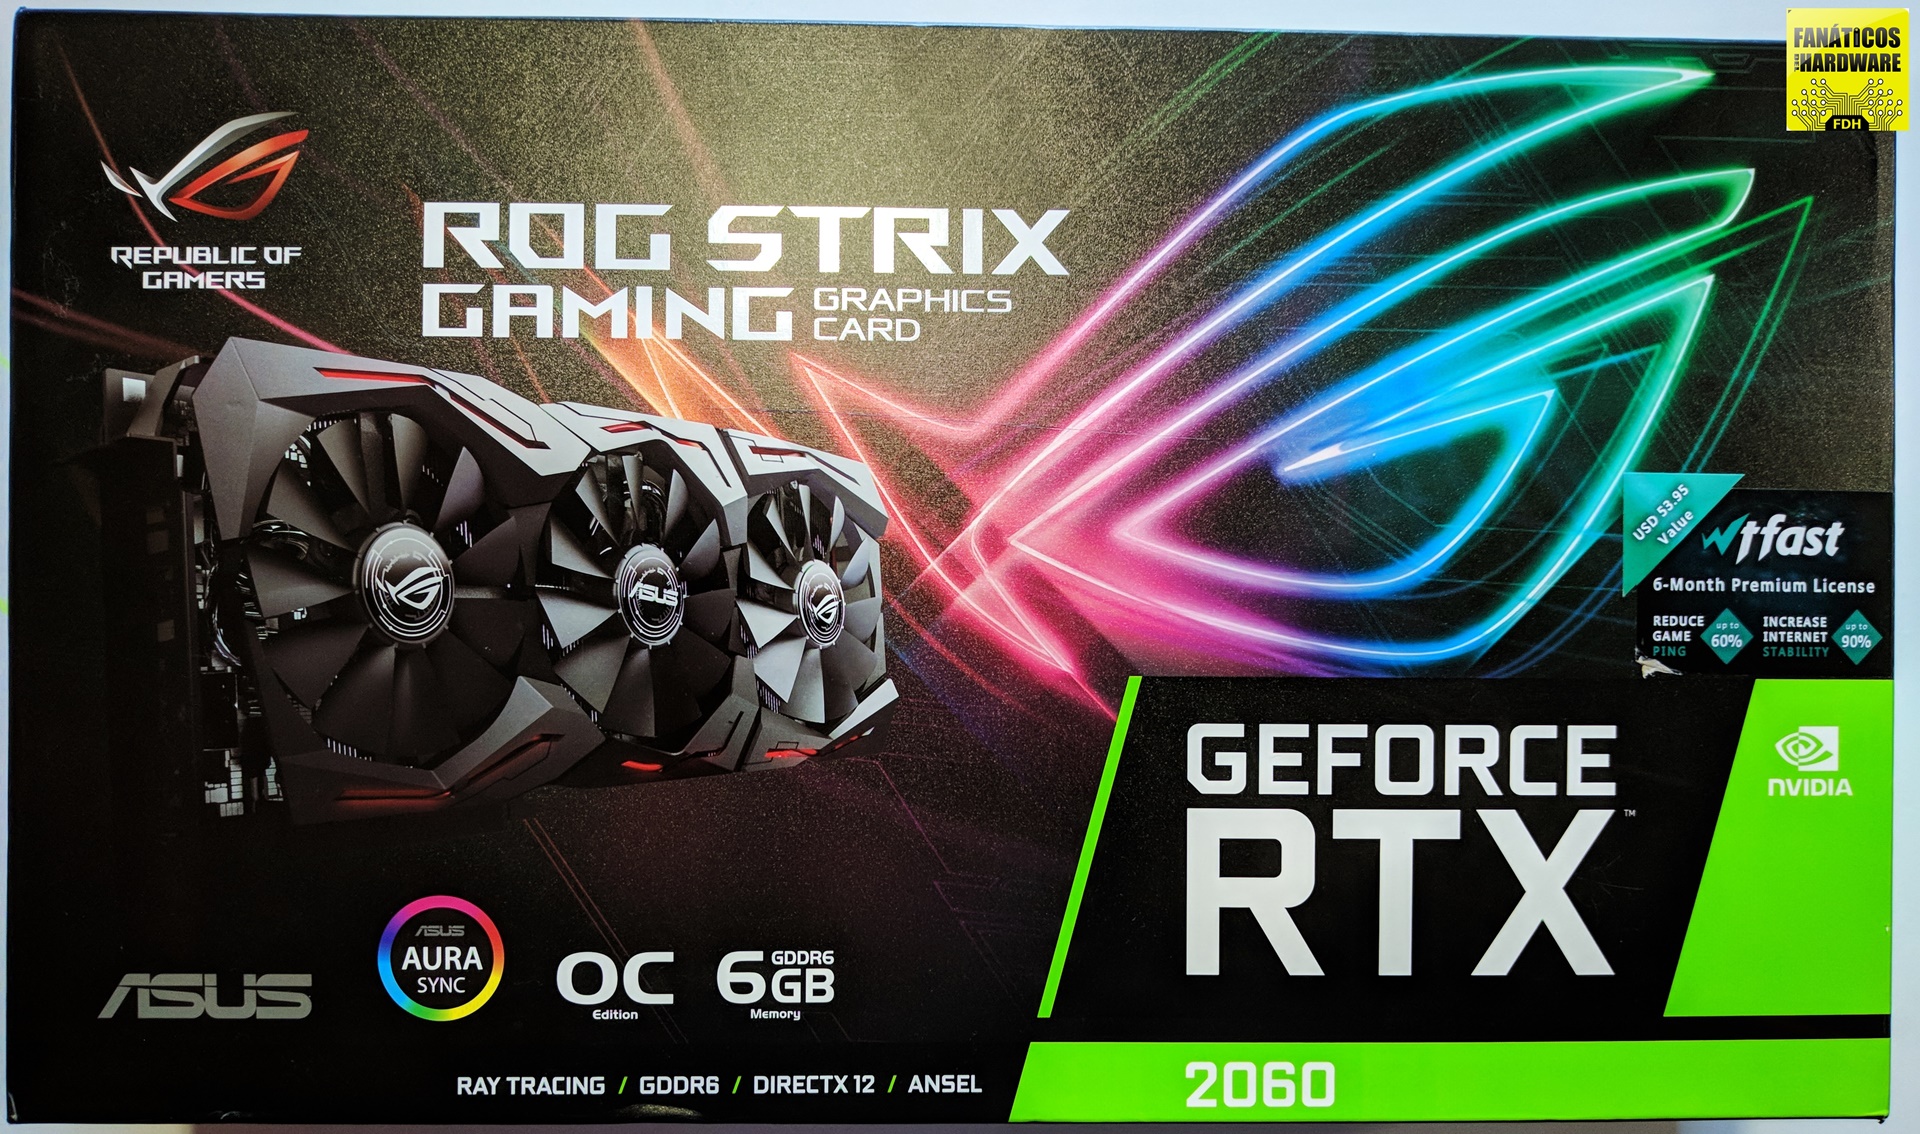 Review Asus ROG STRIX RTX 2060 OC - Fanáticos del Hardware